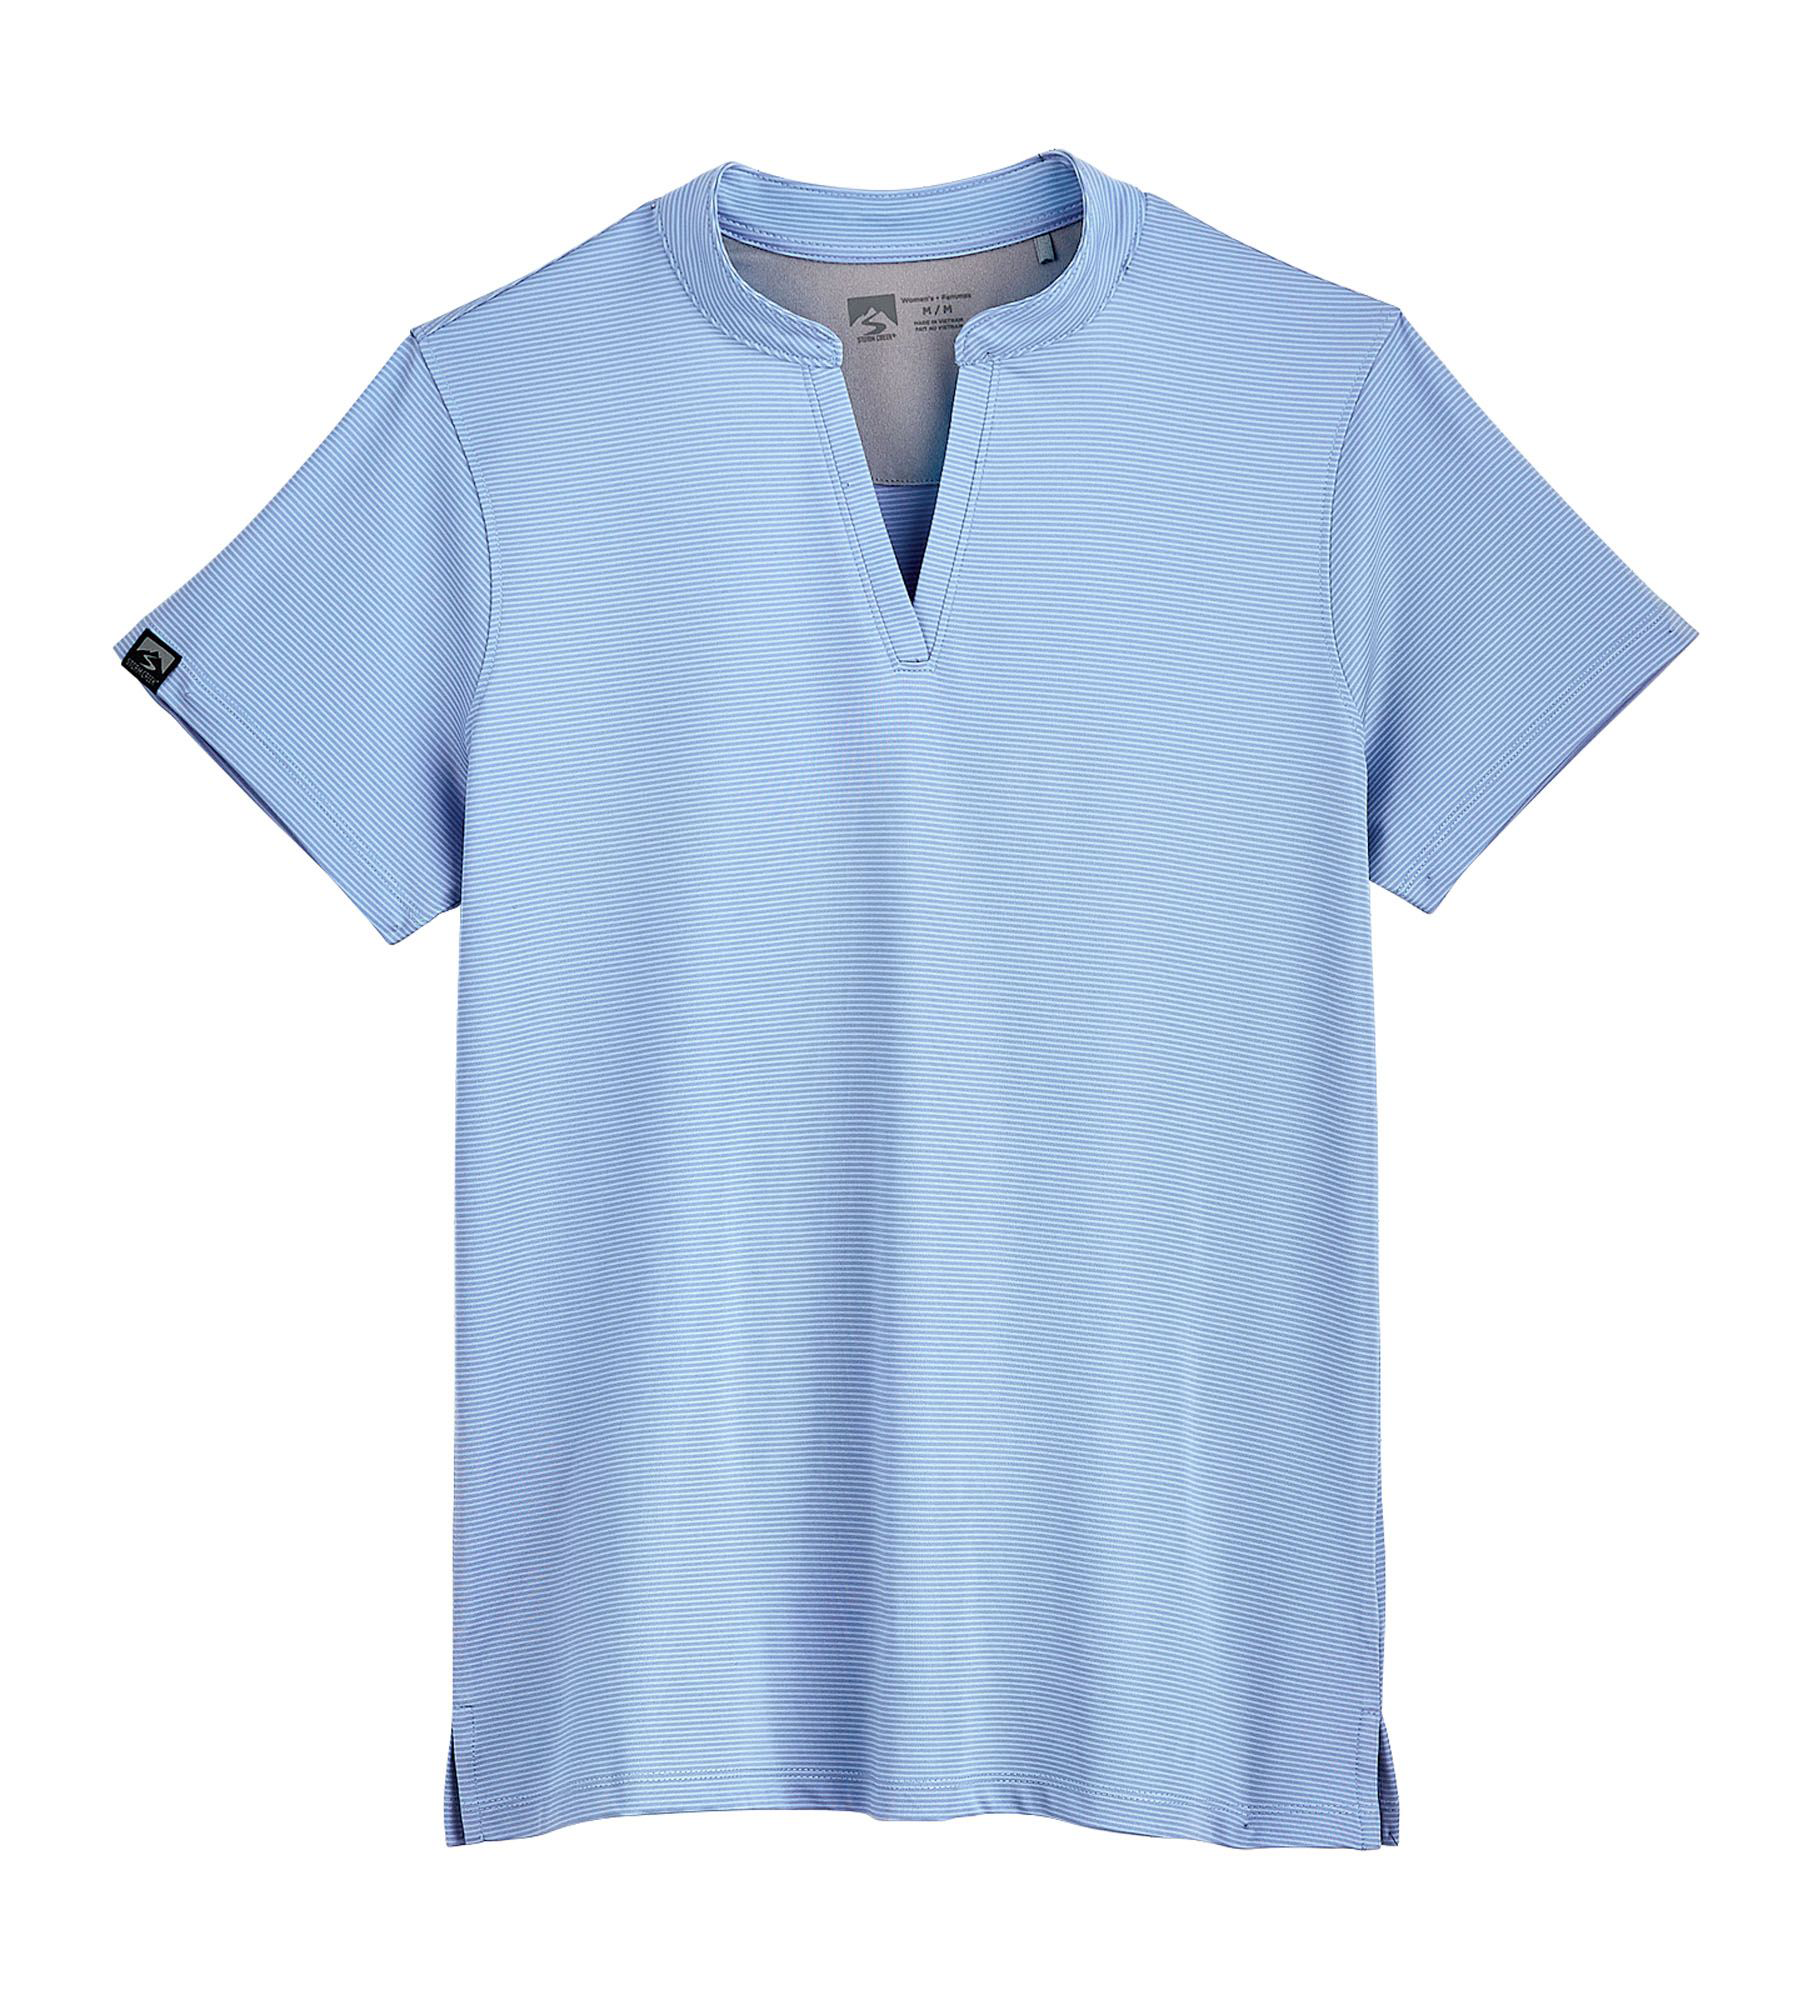 Storm Creek Optimist Short-Sleeve Polo Shirt for Ladies - Peri Blue - XS